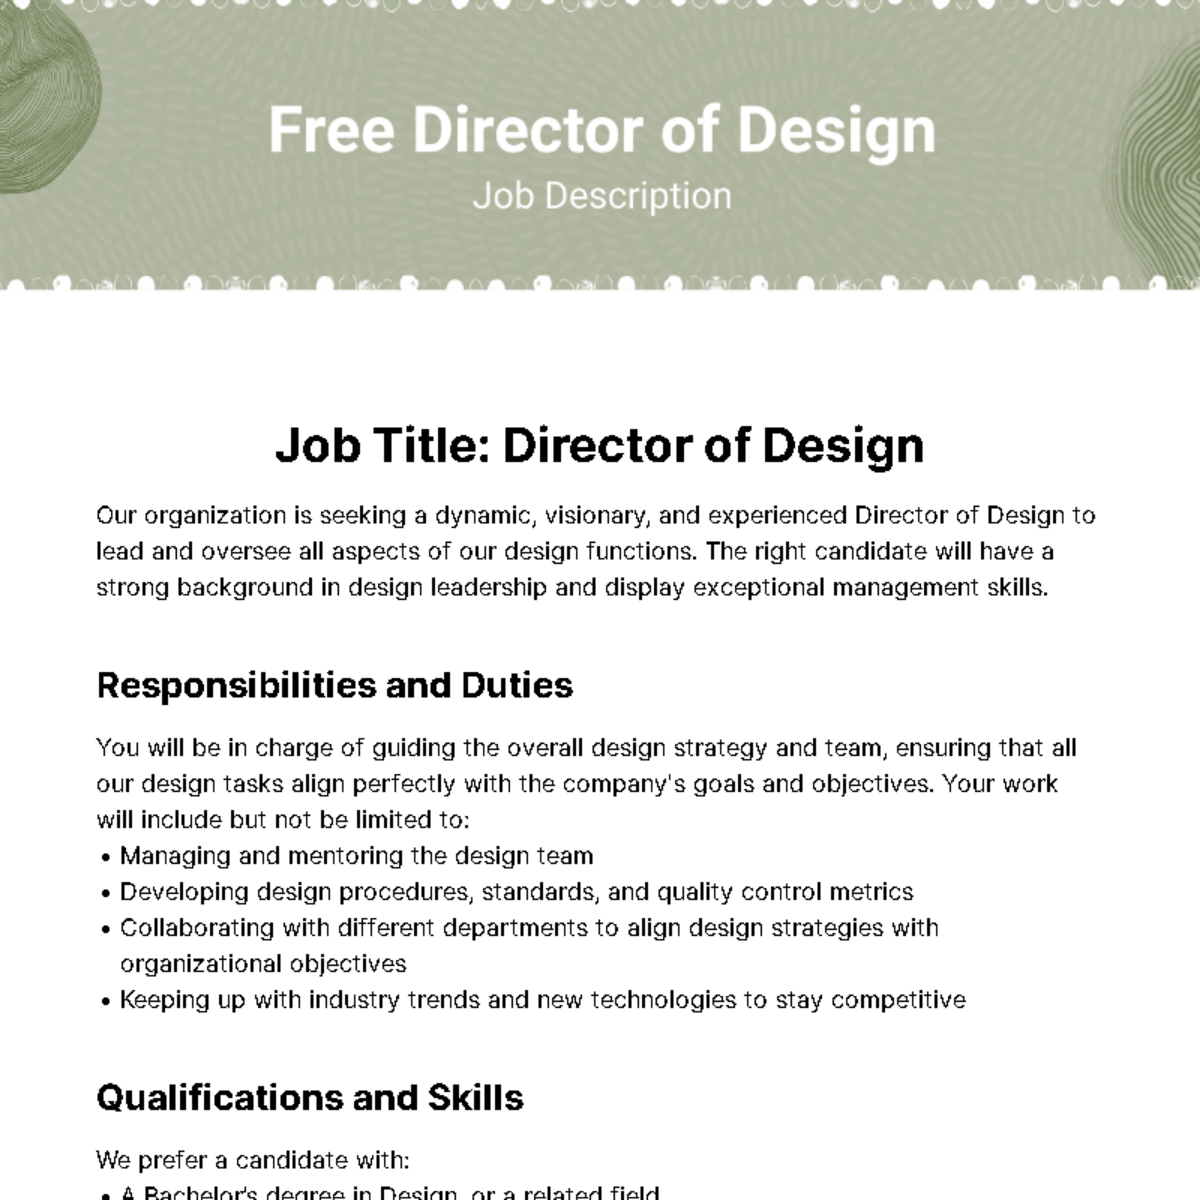 Director of Design Job Description Template